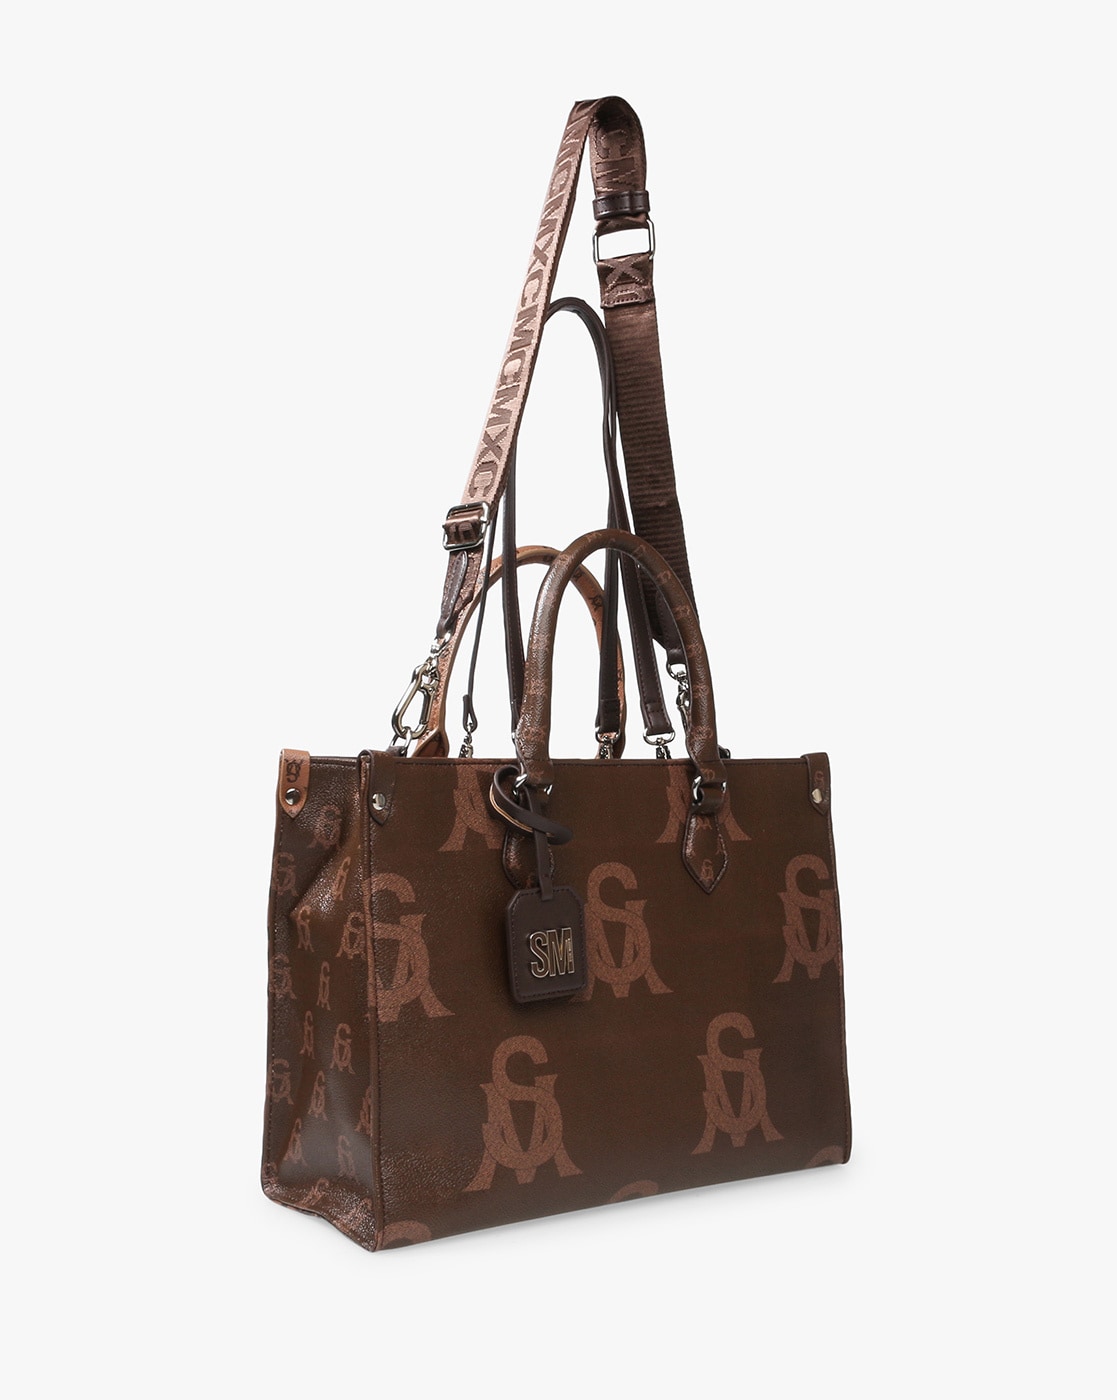 Wholesale High Quality Steve Madden Bags  China Lady Handbag and Women Bag  price  MadeinChinacom